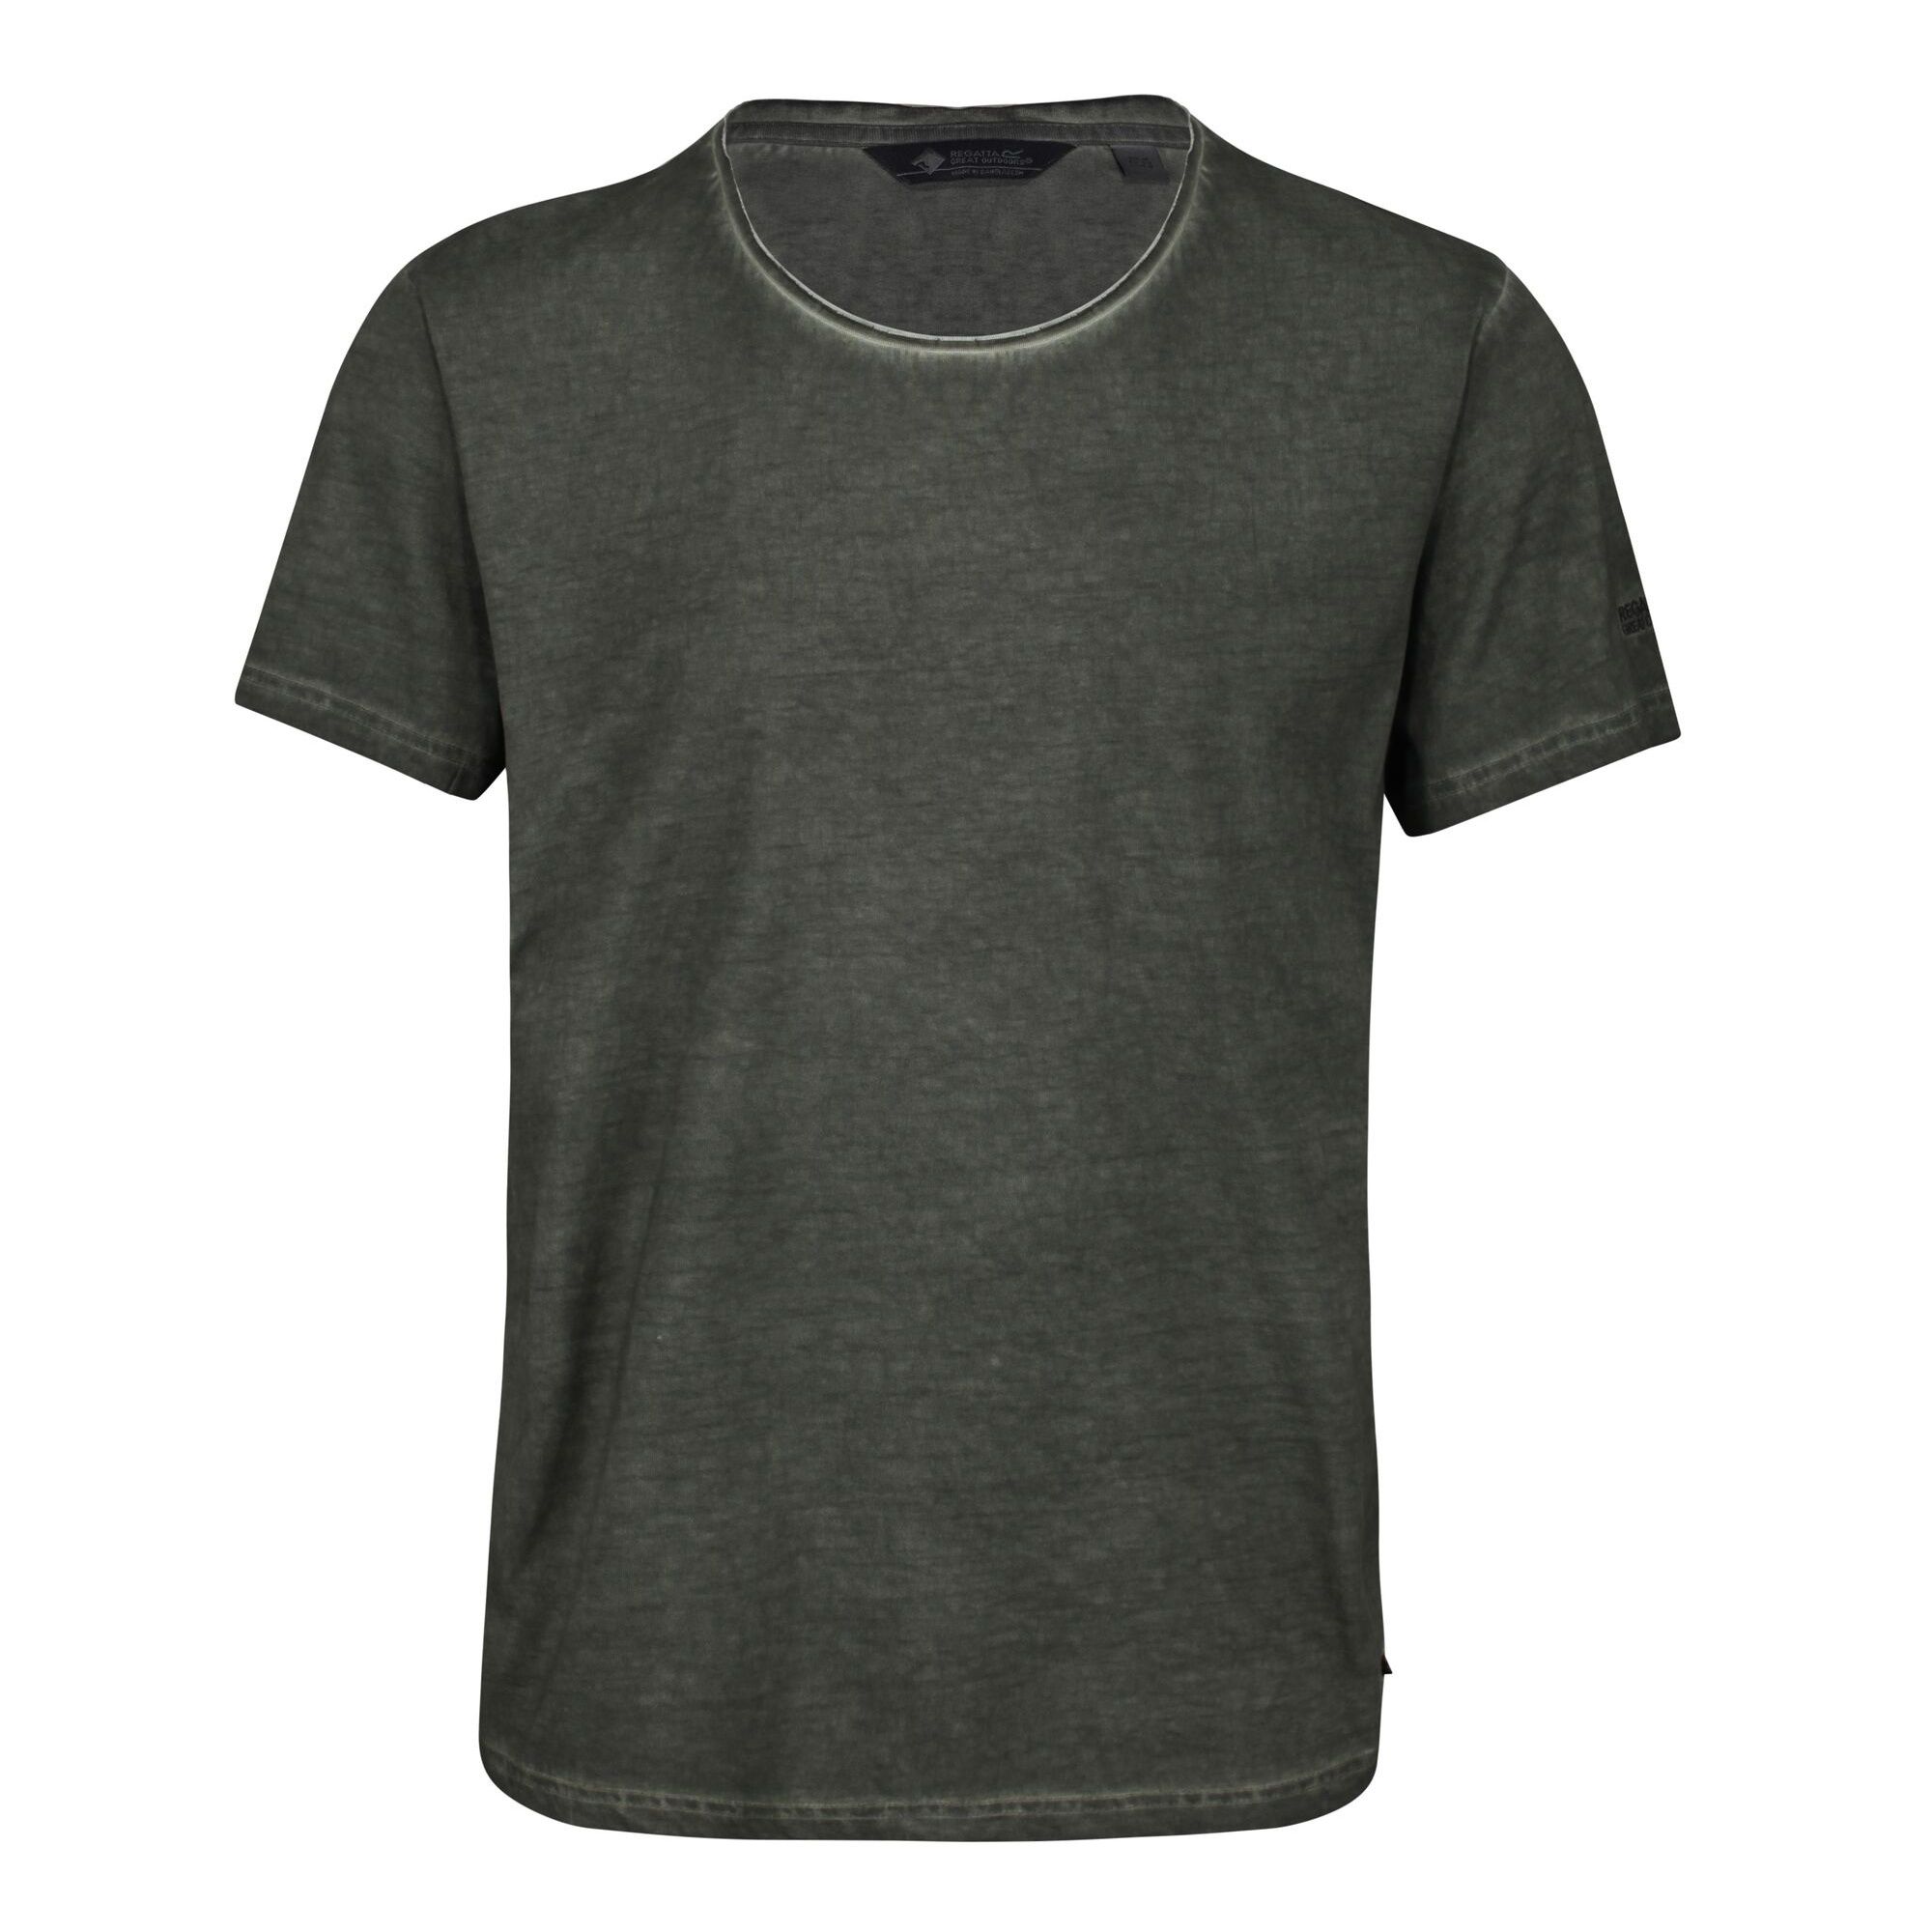 Material: 100% organic cotton. Crew neck. Short sleeves. Regular fit.